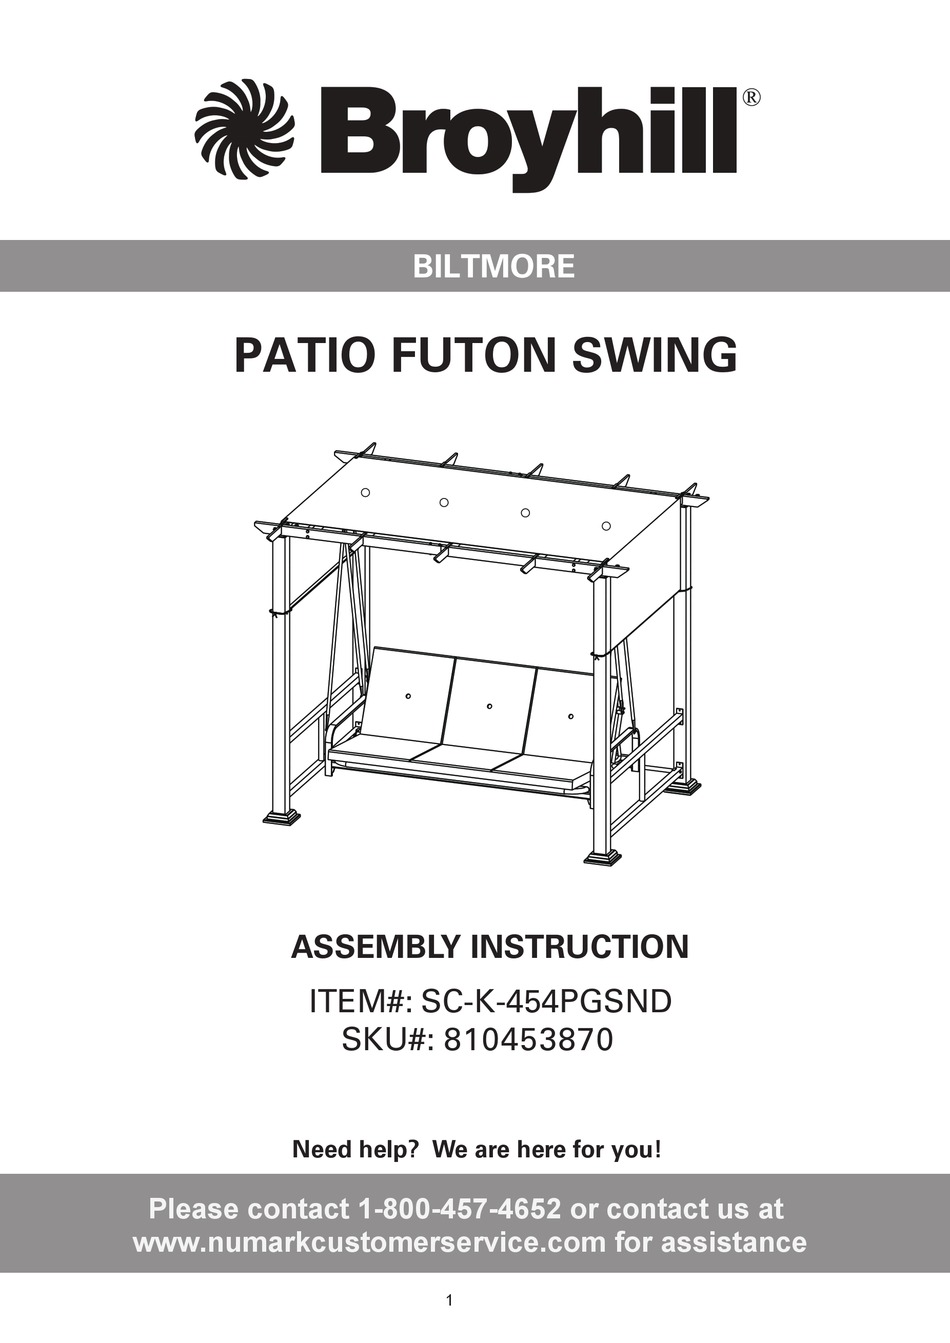 Assembly Instructions Manual Pdf, Broyhill Patio Futon Swing